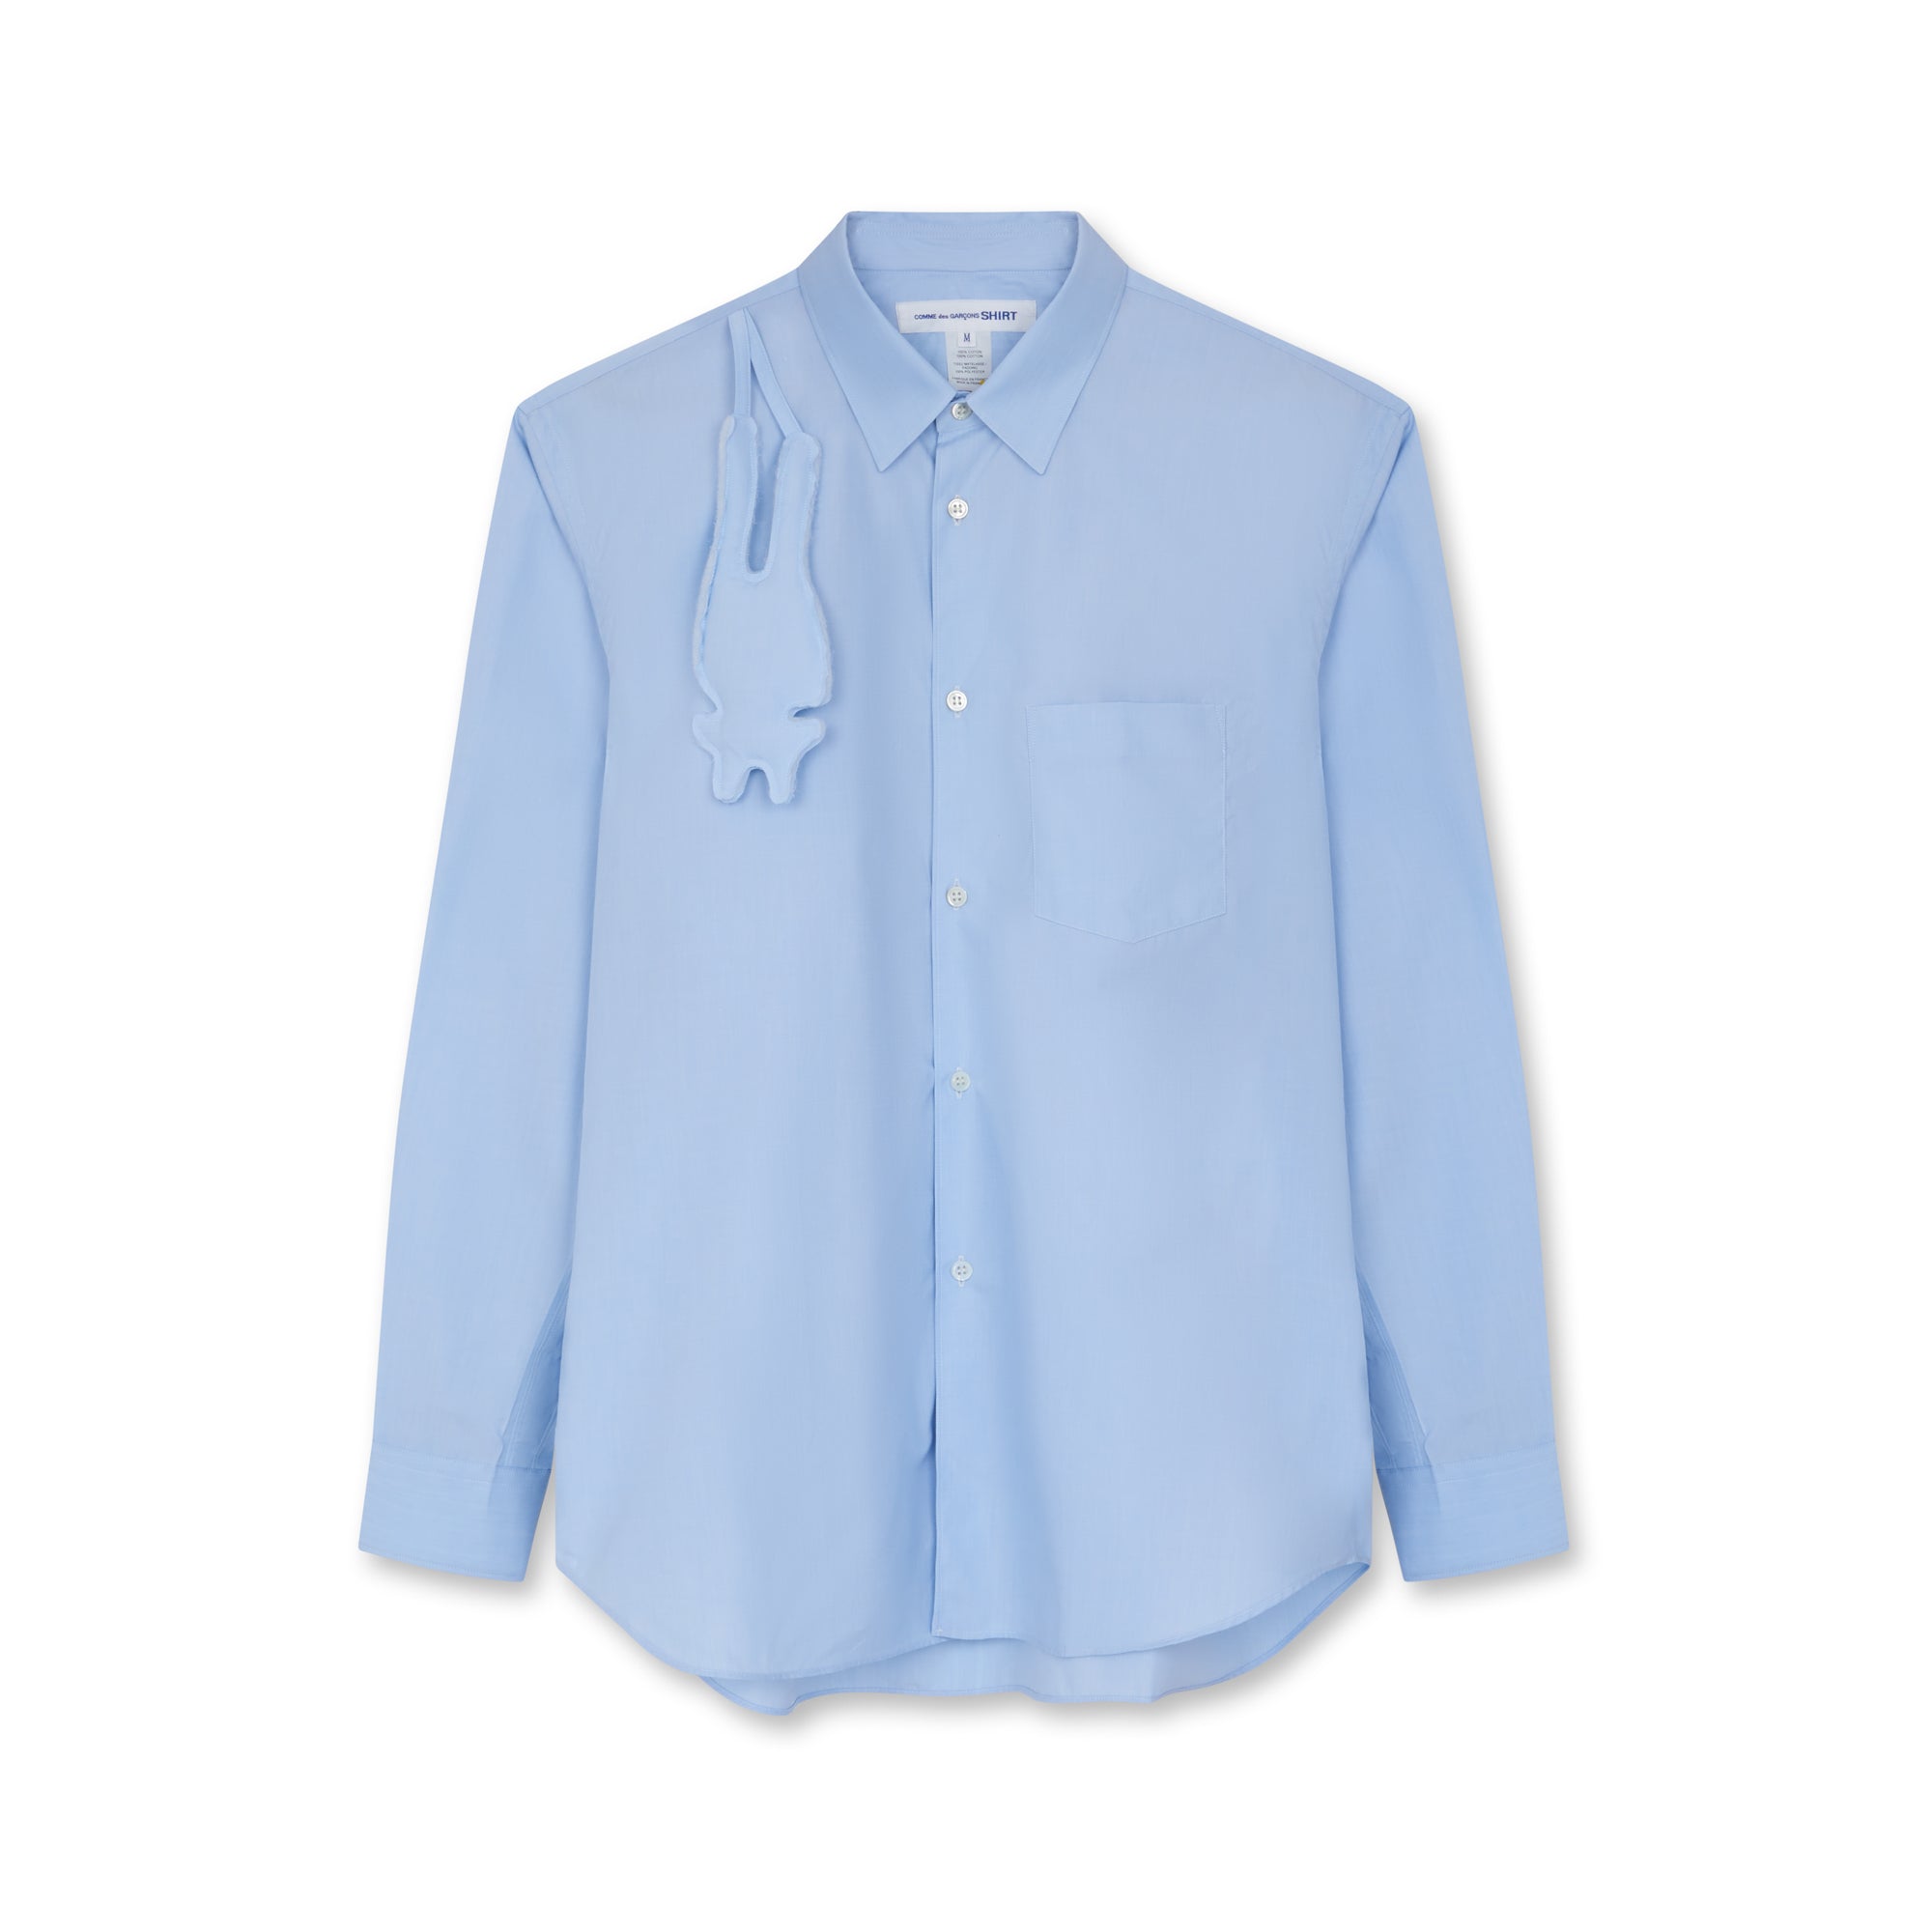 CDG Shirt - Cotton Poplin Plain Creature Shirt - (Blue)